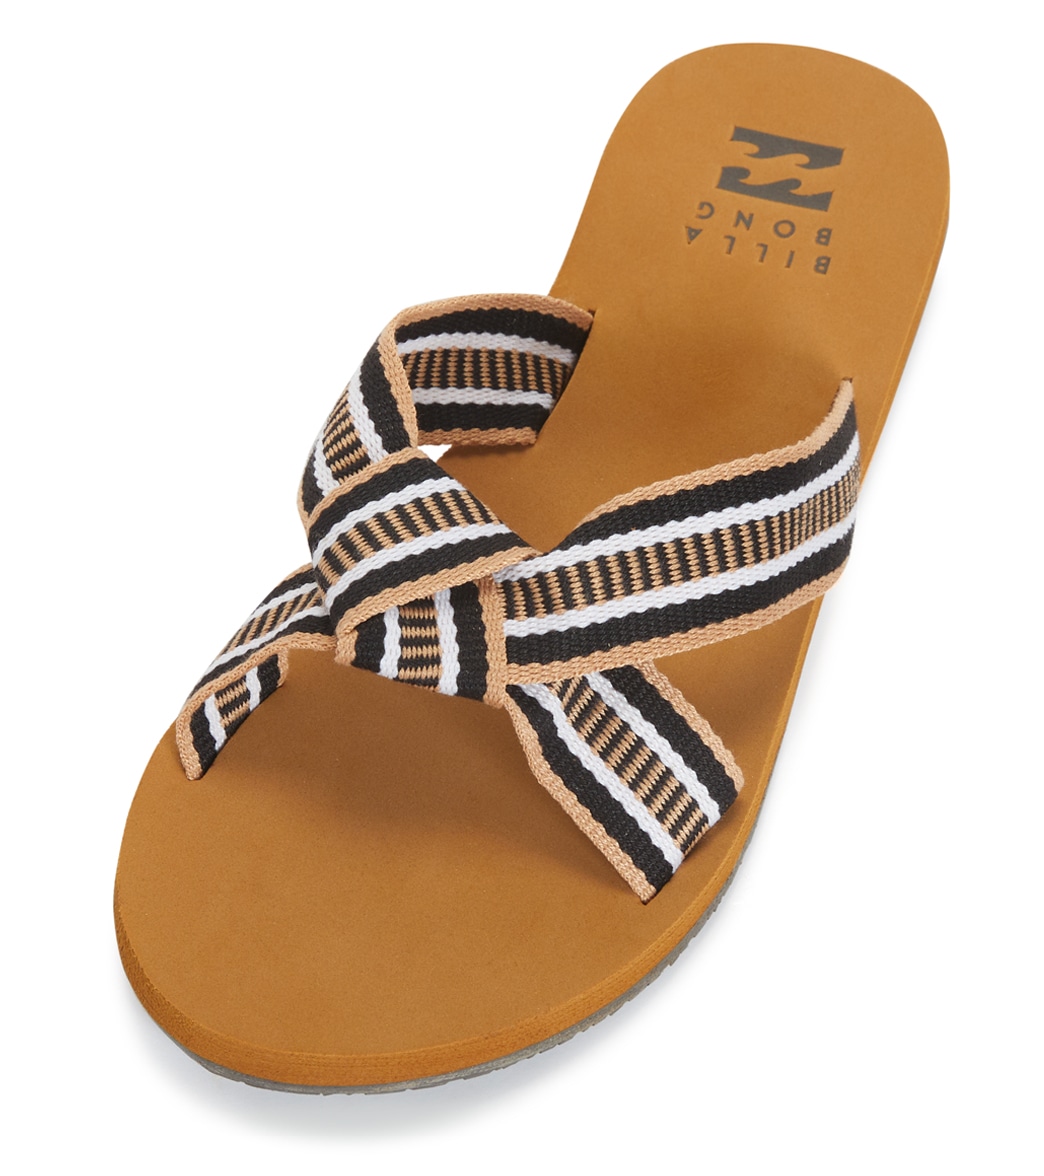 Billabong Women's Seashell Slides Sandals - Black/Tan 7 - Swimoutlet.com